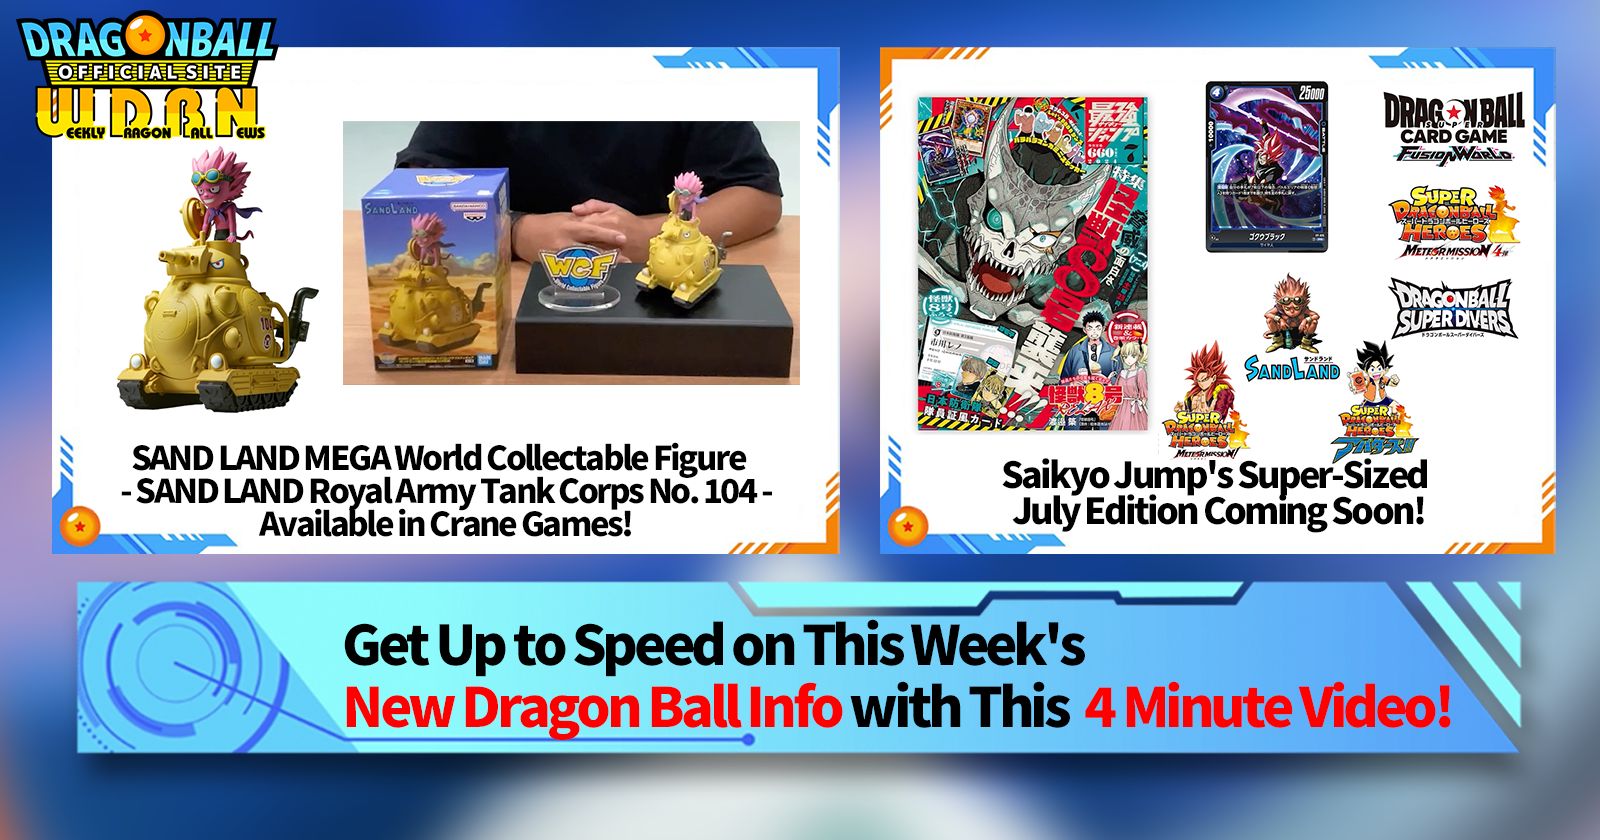 [June 3rd] Weekly Dragon Ball News Broadcast!